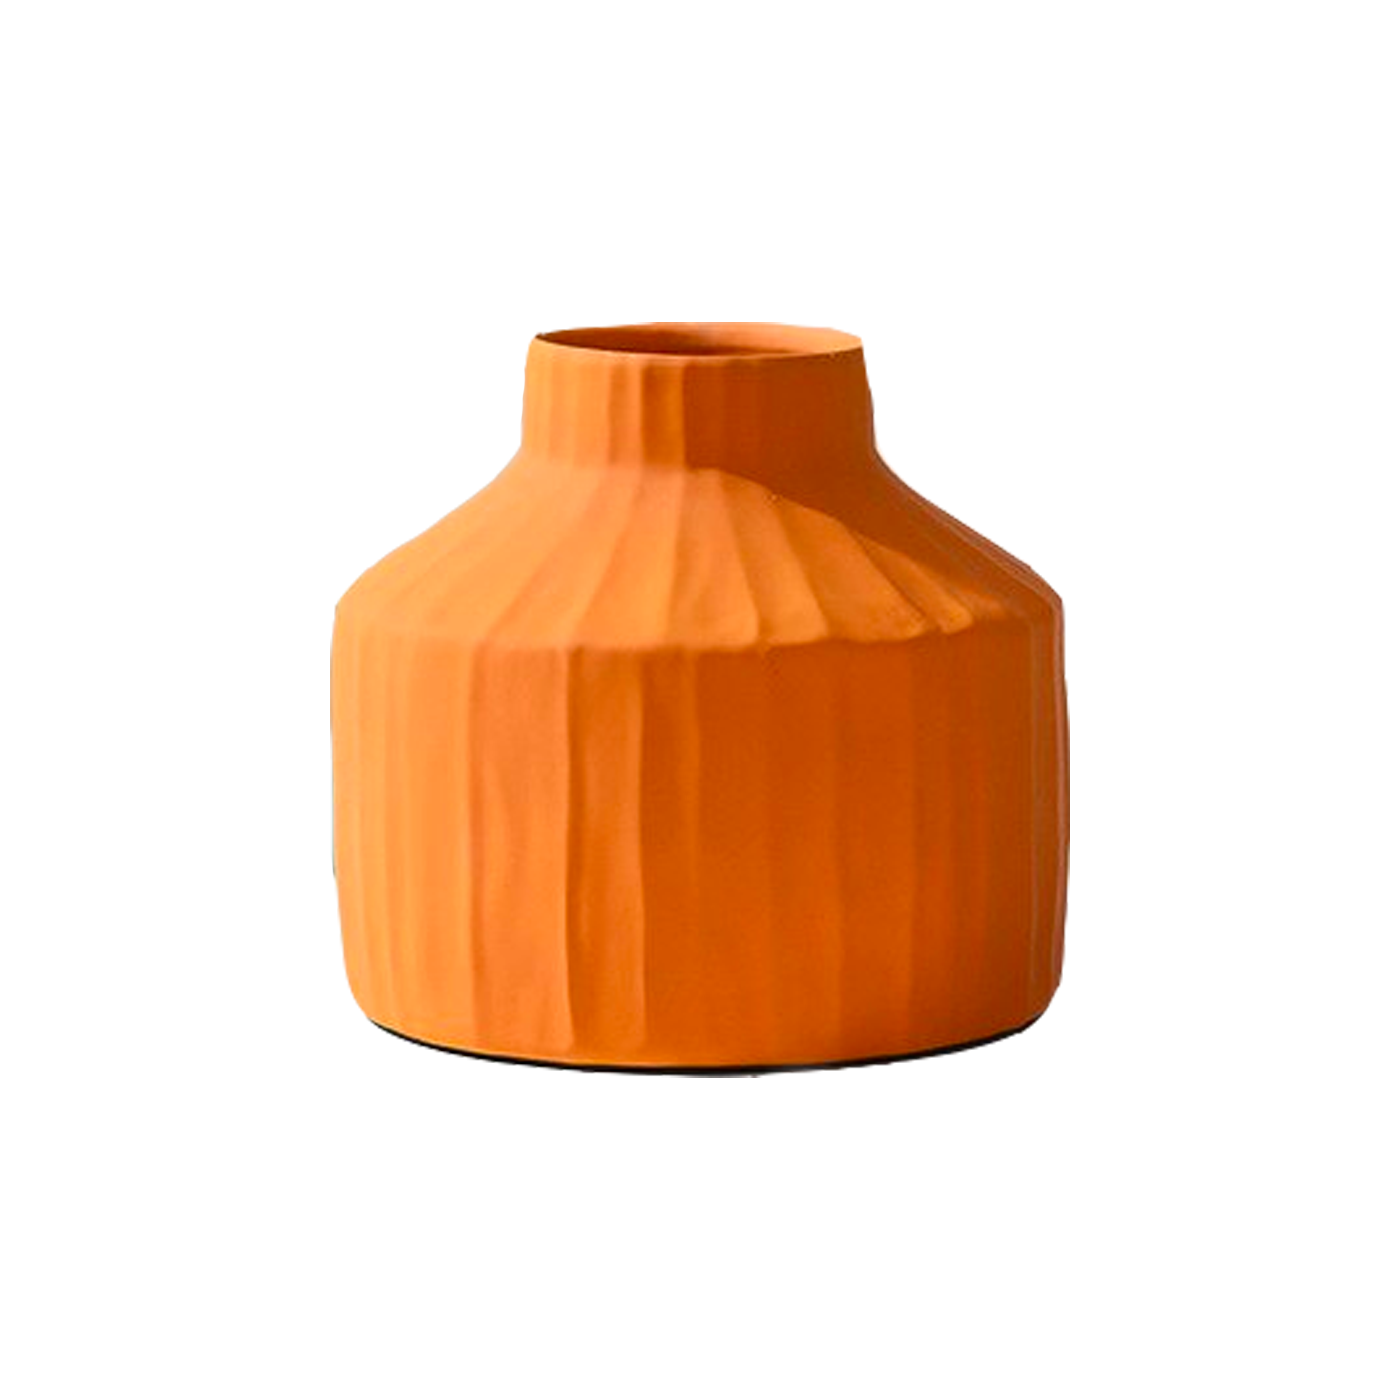 Korinthos mustard ceramic vase with vintage design by Pavao Studio